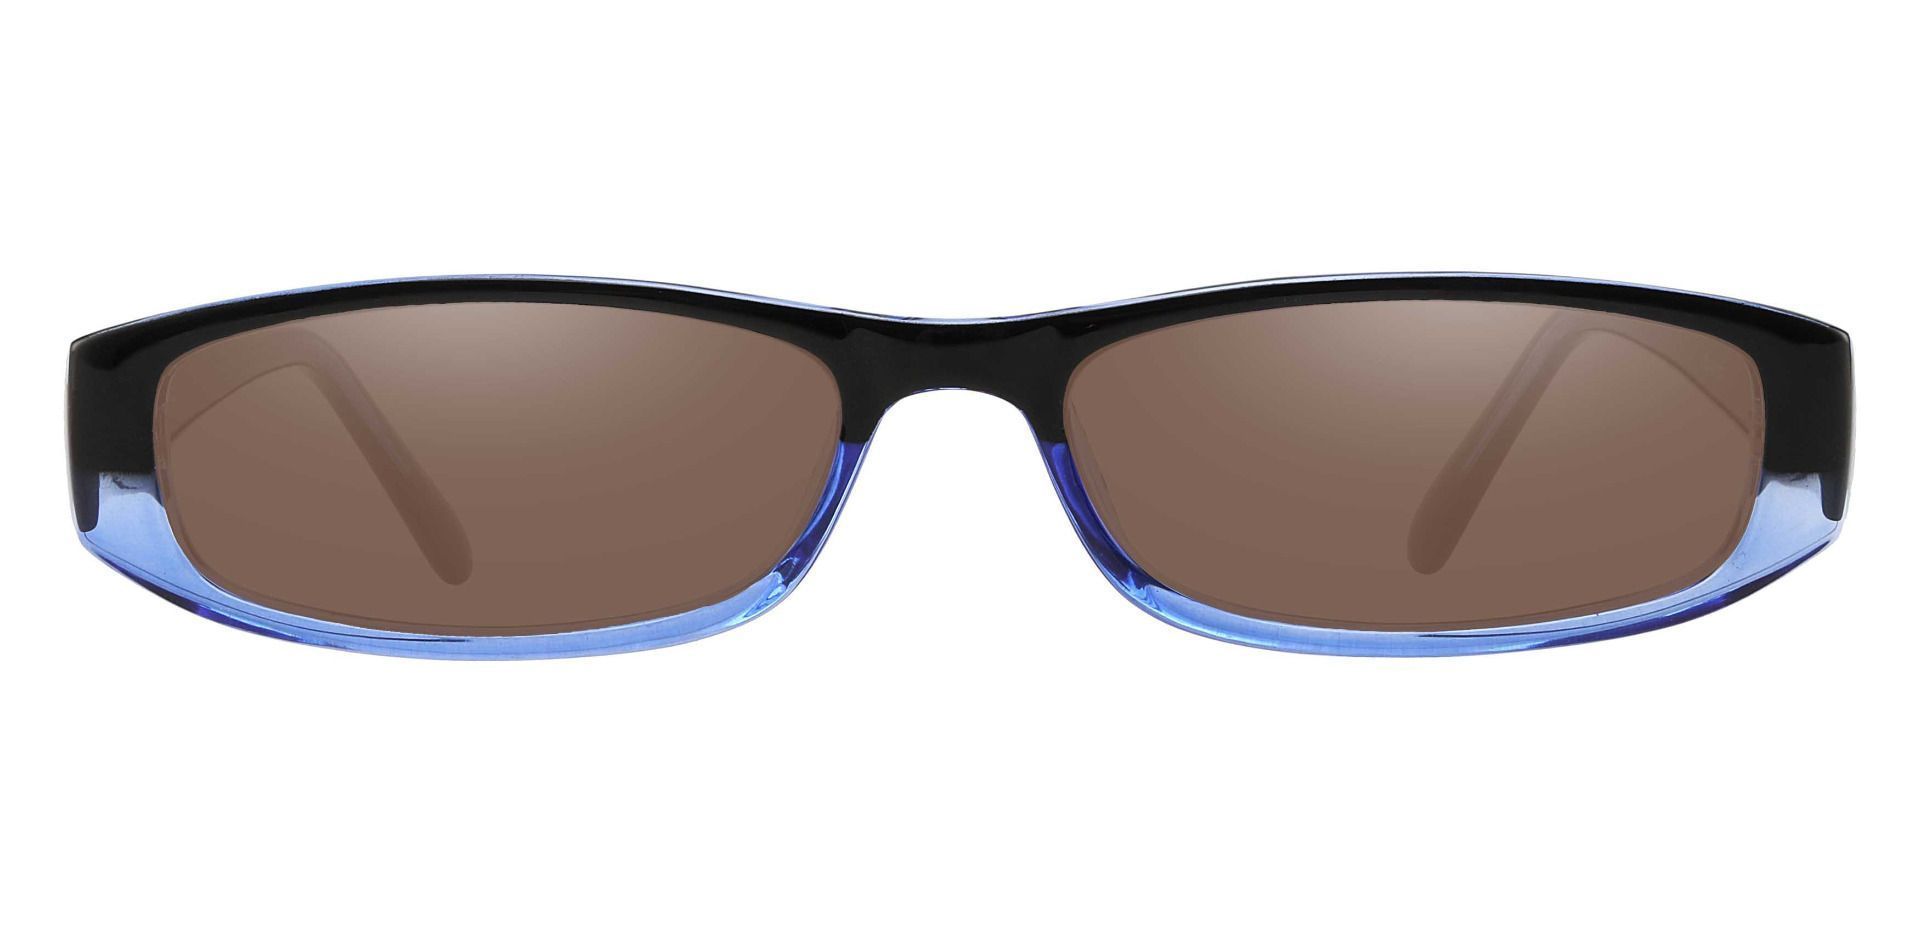 Elgin Rectangle Single Vision Sunglasses - Blue Frame With Brown Lenses